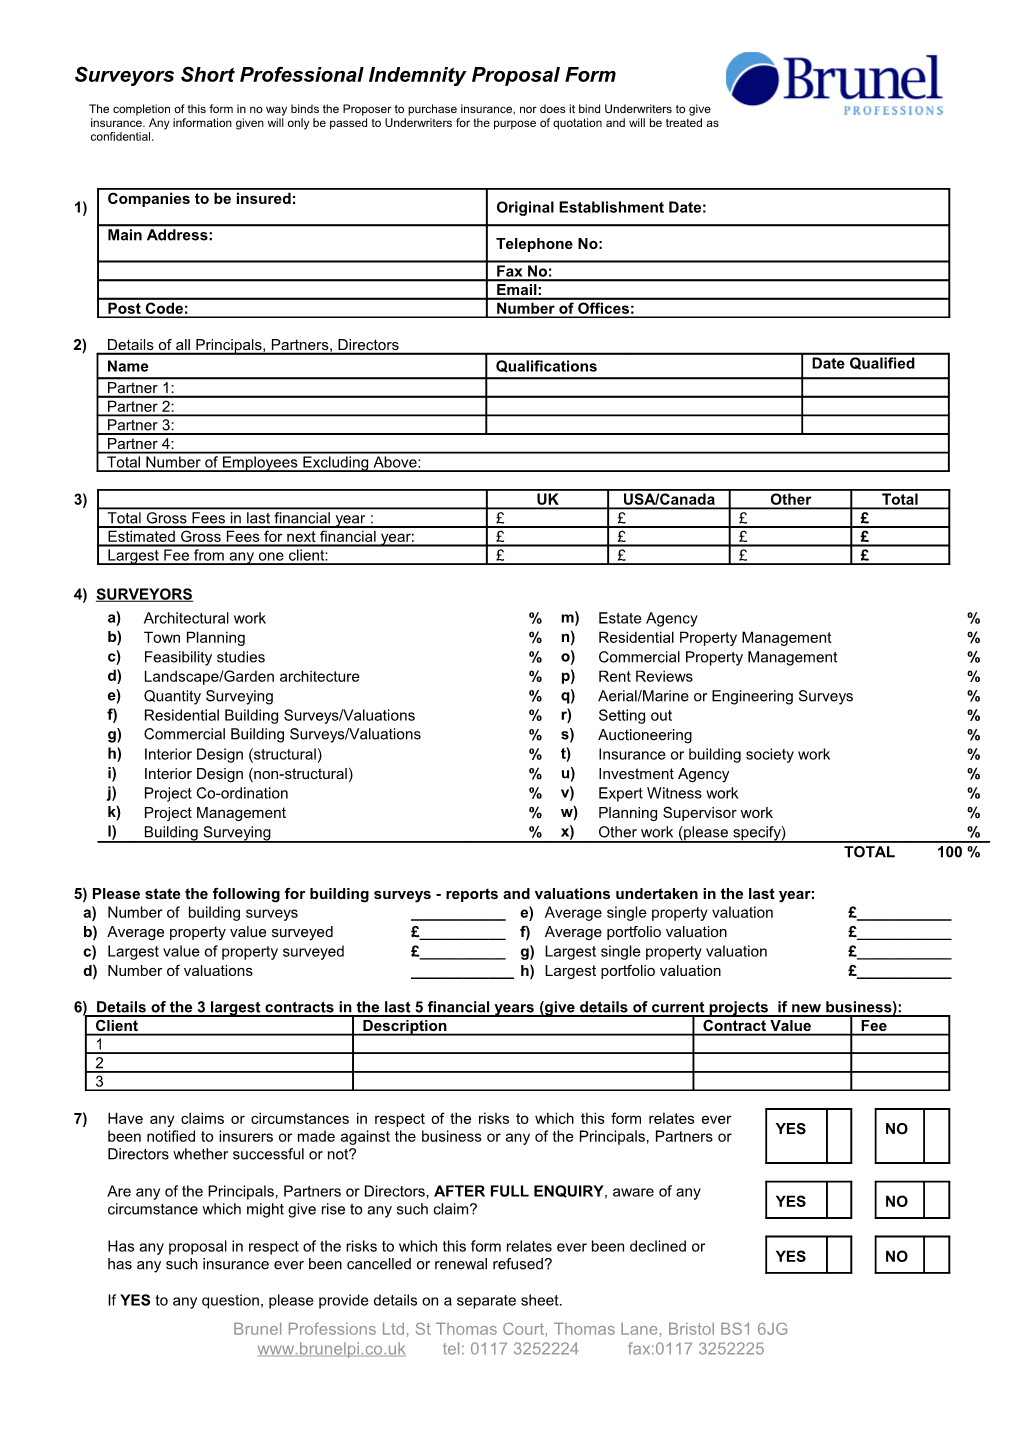 Surveyors Short Professional Indemnity Proposal Form